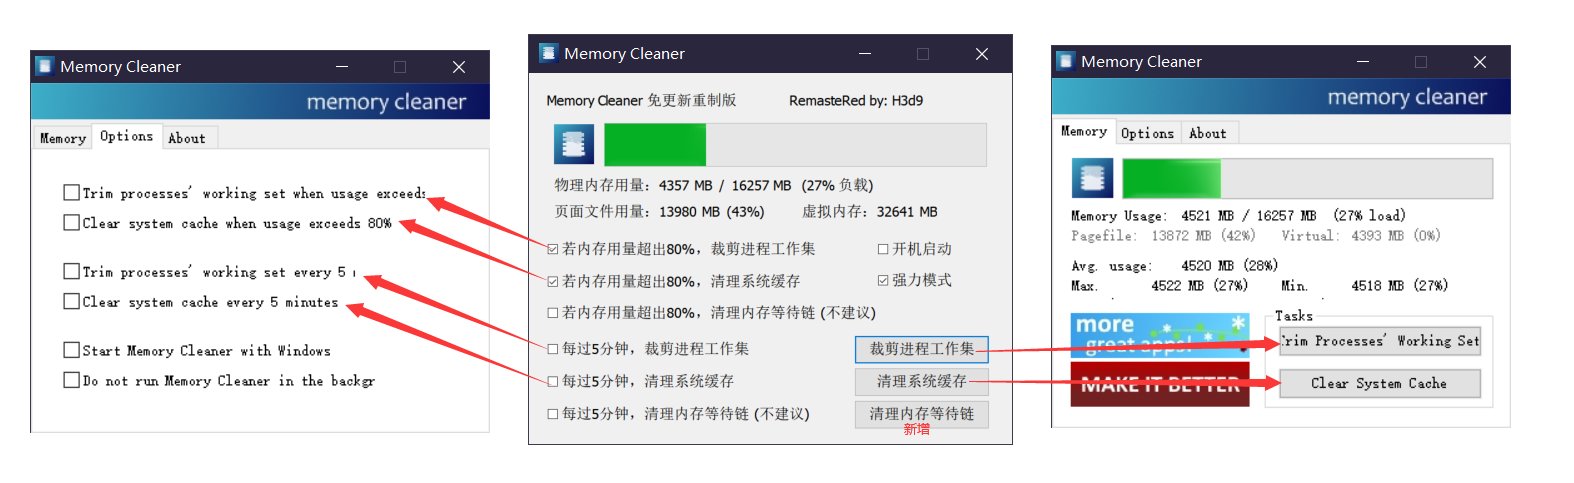 【内存清理】Memory Cleaner 重制版（22.10.1更新）2